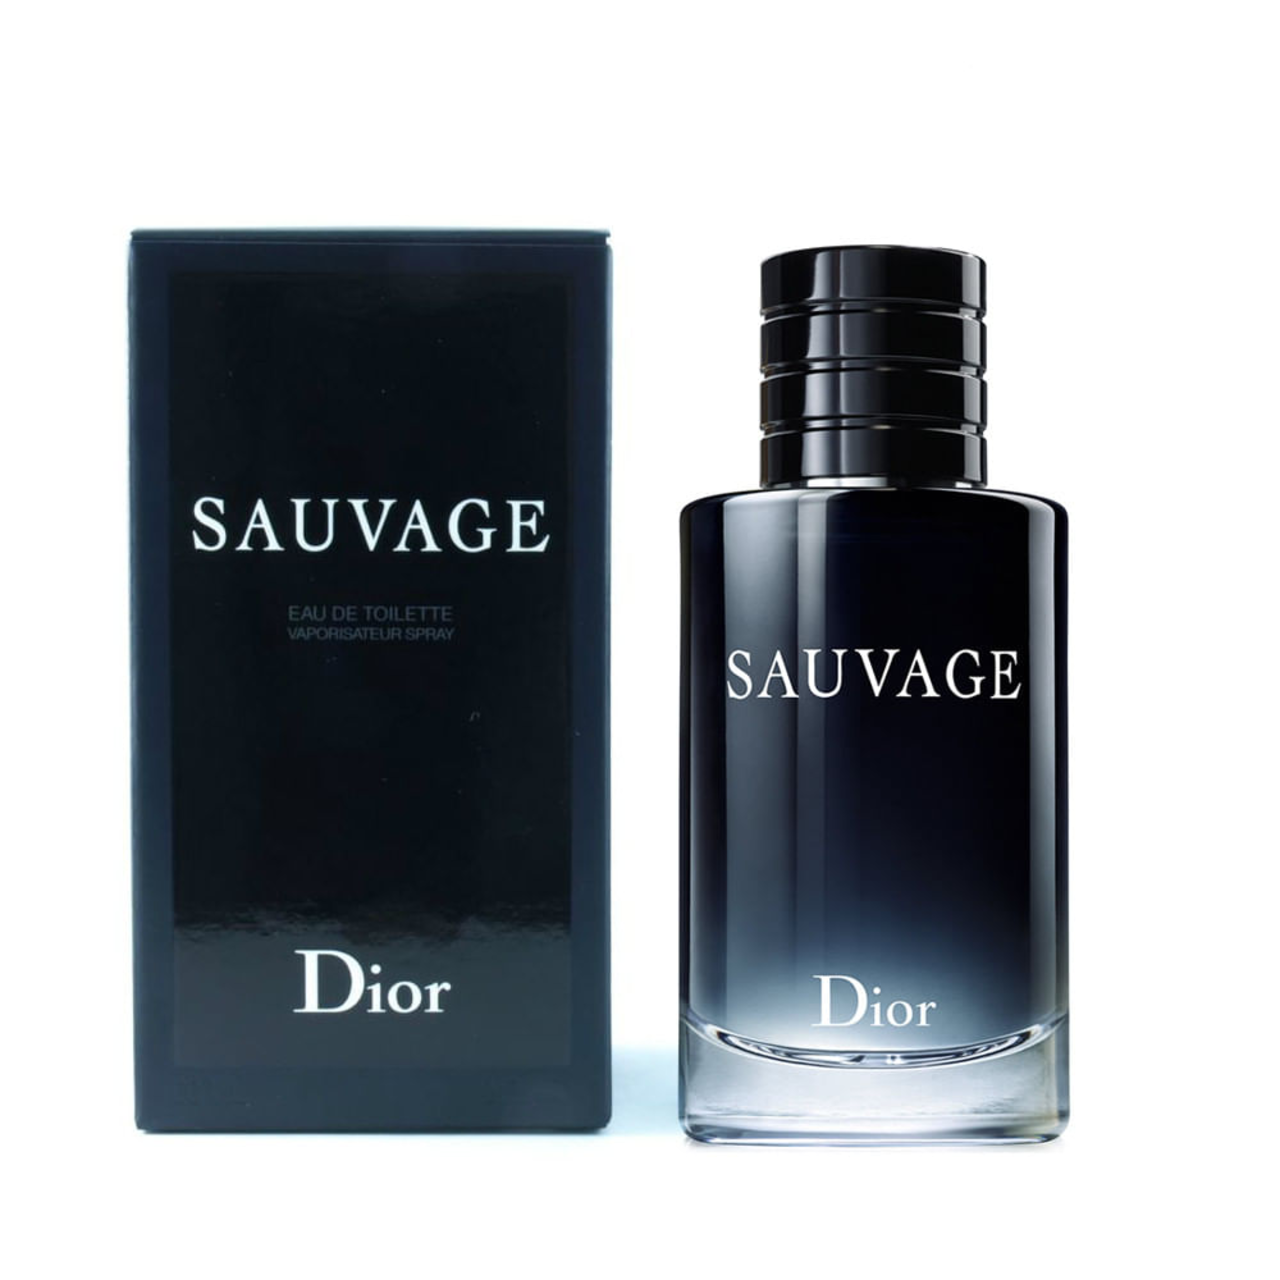 Perfume Sauvage de Christian Dior Eau de Toilette | ZZ MALL